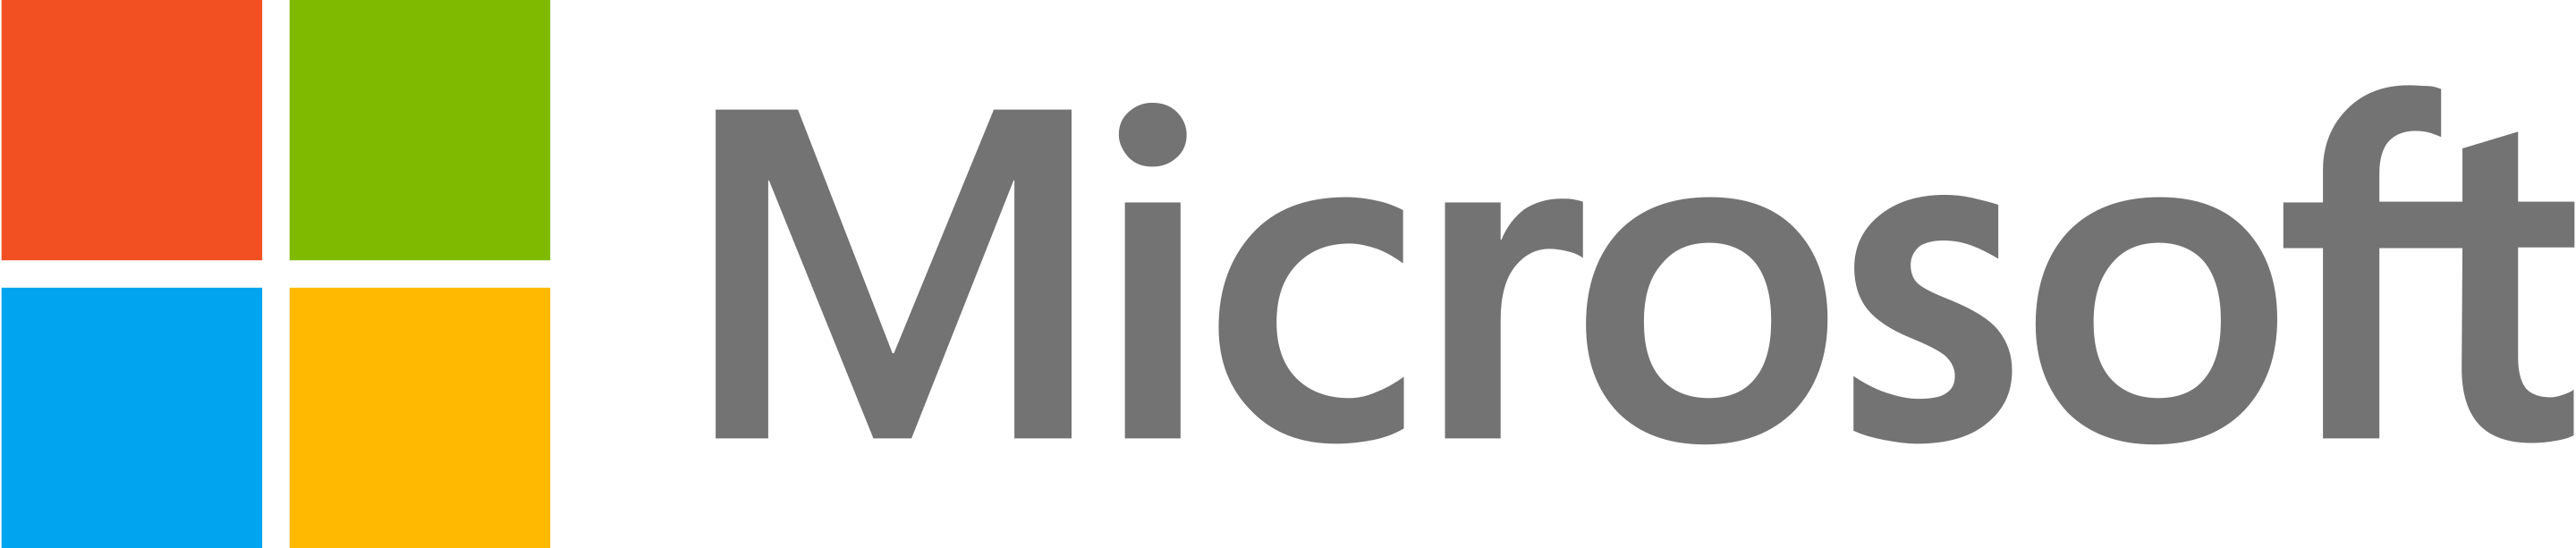 Microsoft logo 2012 present